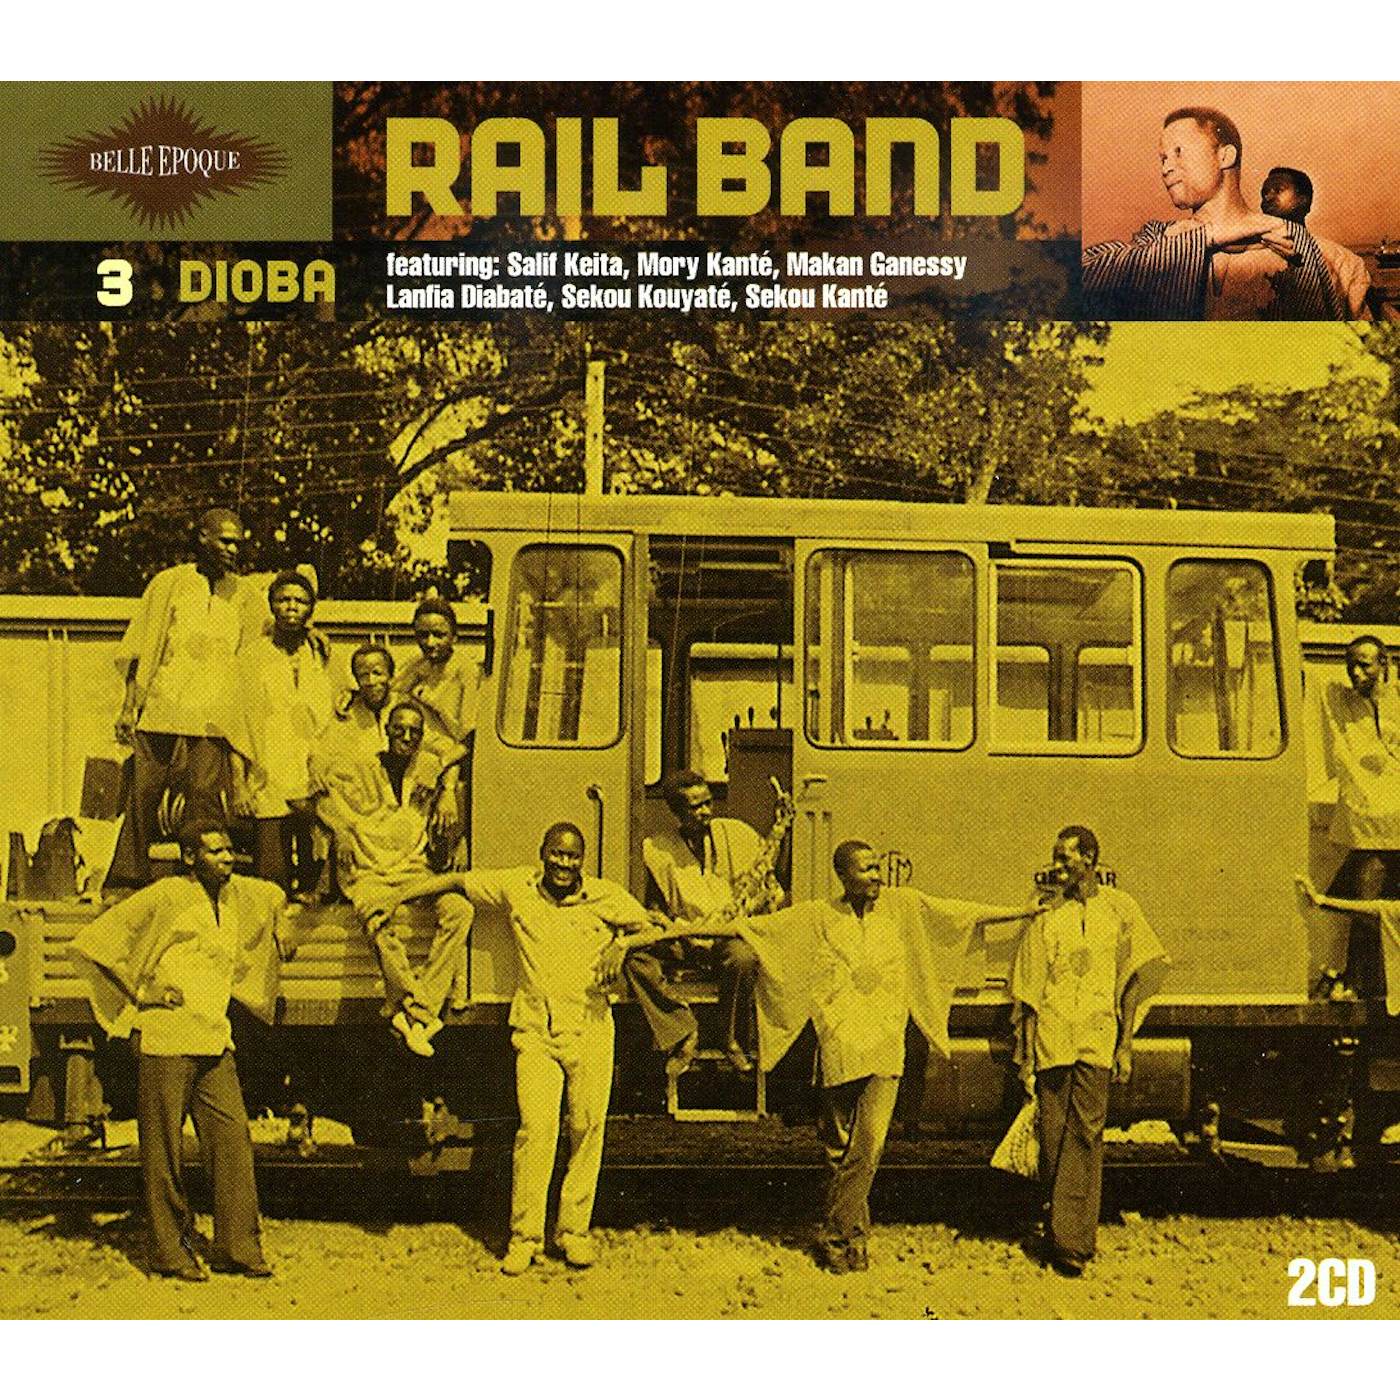 Rail Band BELLE EPOQUE 3: DIOBA CD